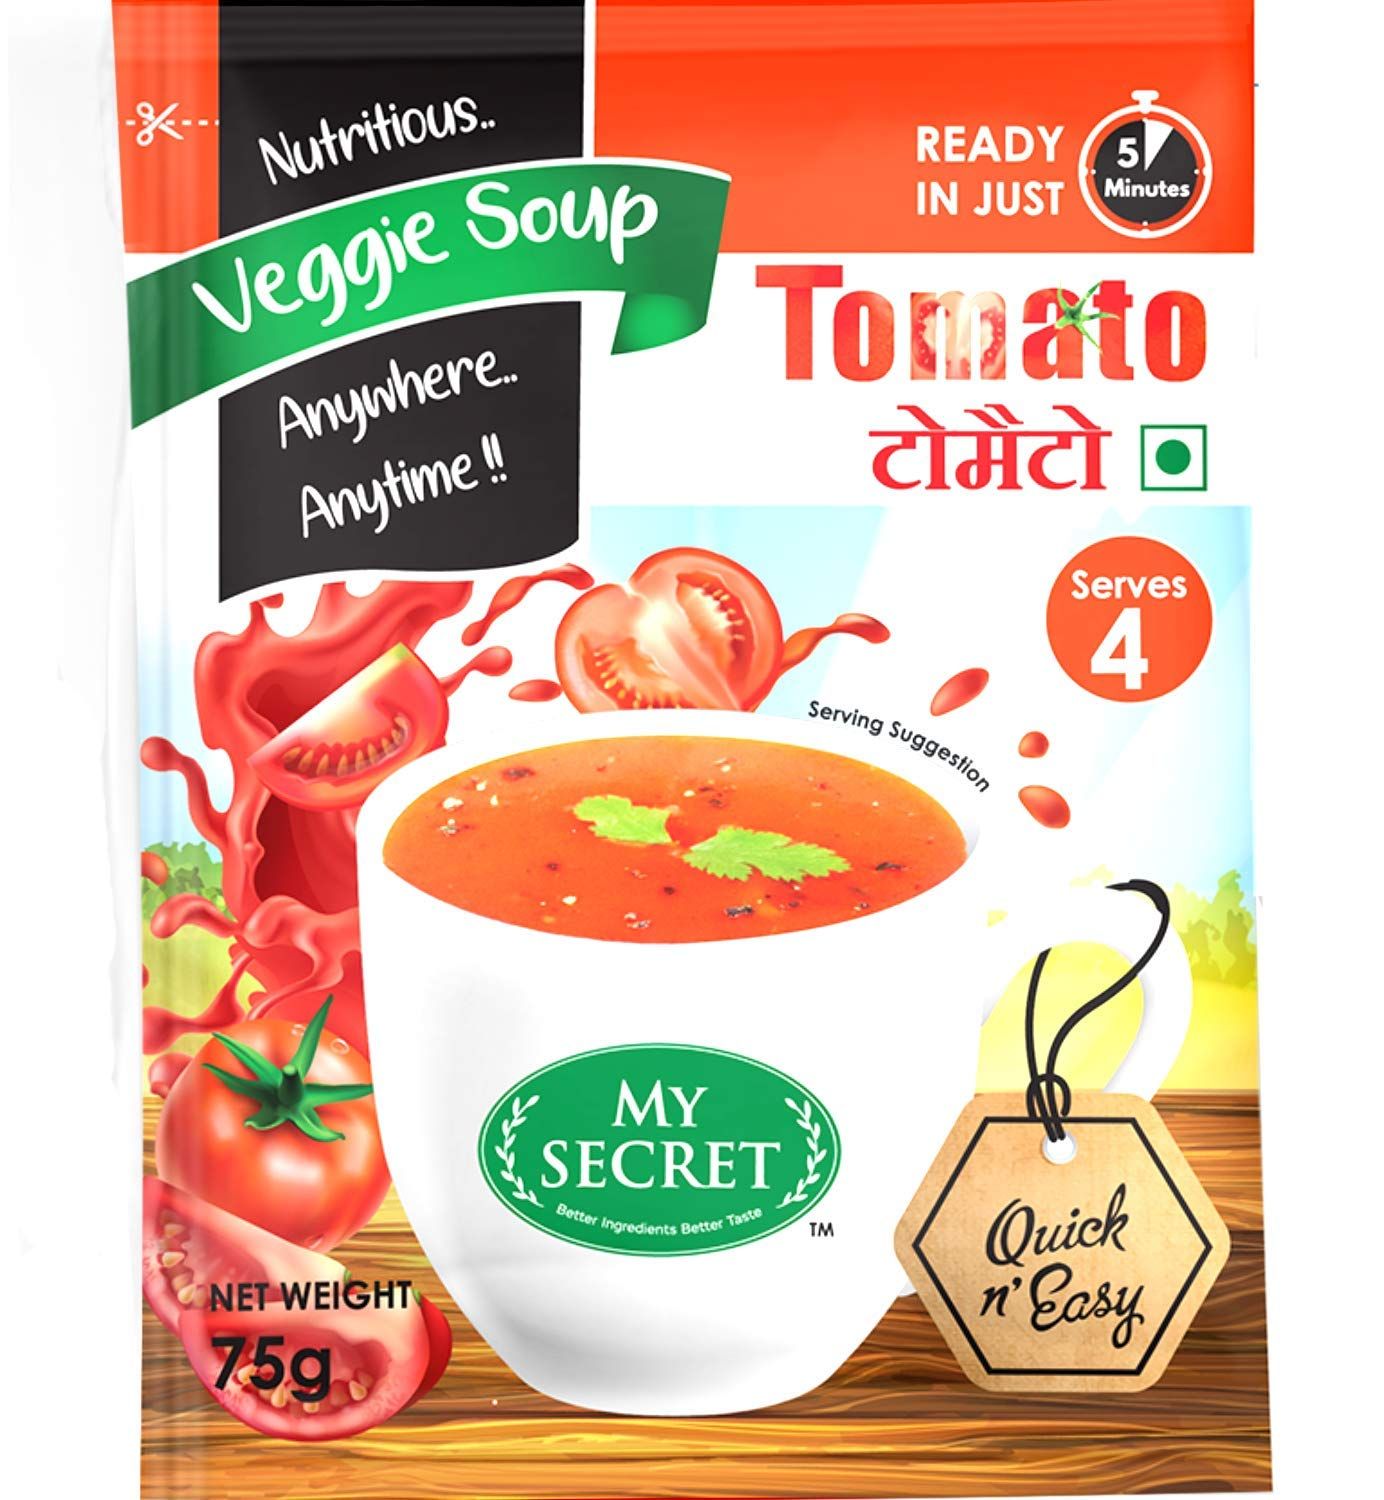 MY SECRET Tomato Soup Image